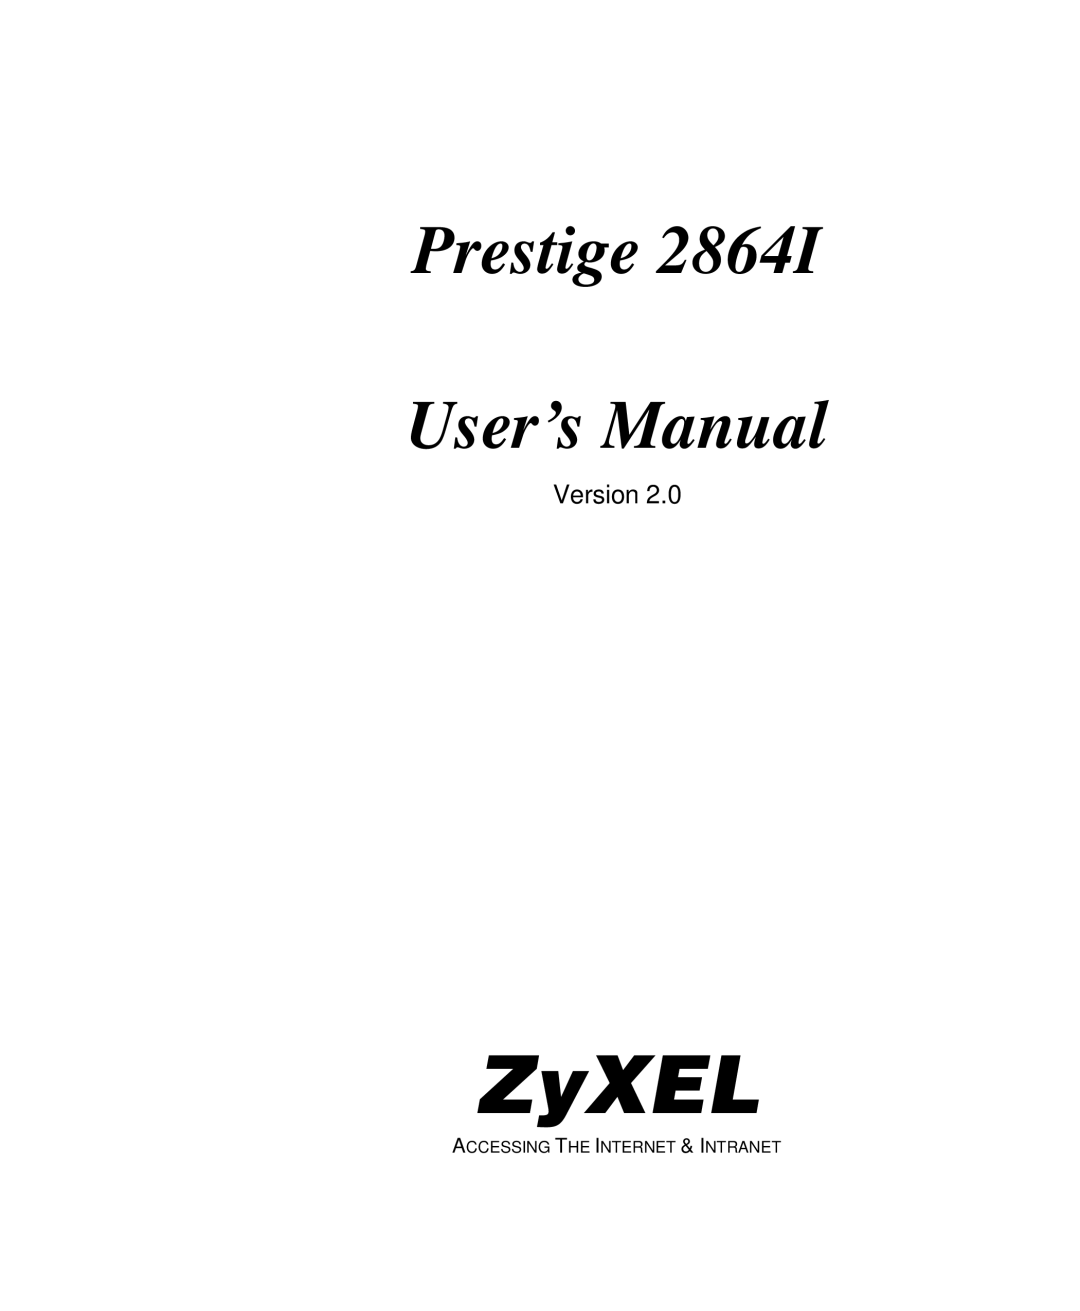 ZyXEL Communications 2864I user manual JiH5, Prestige User’s Manual, Version, Accessing The Internet & Intranet 